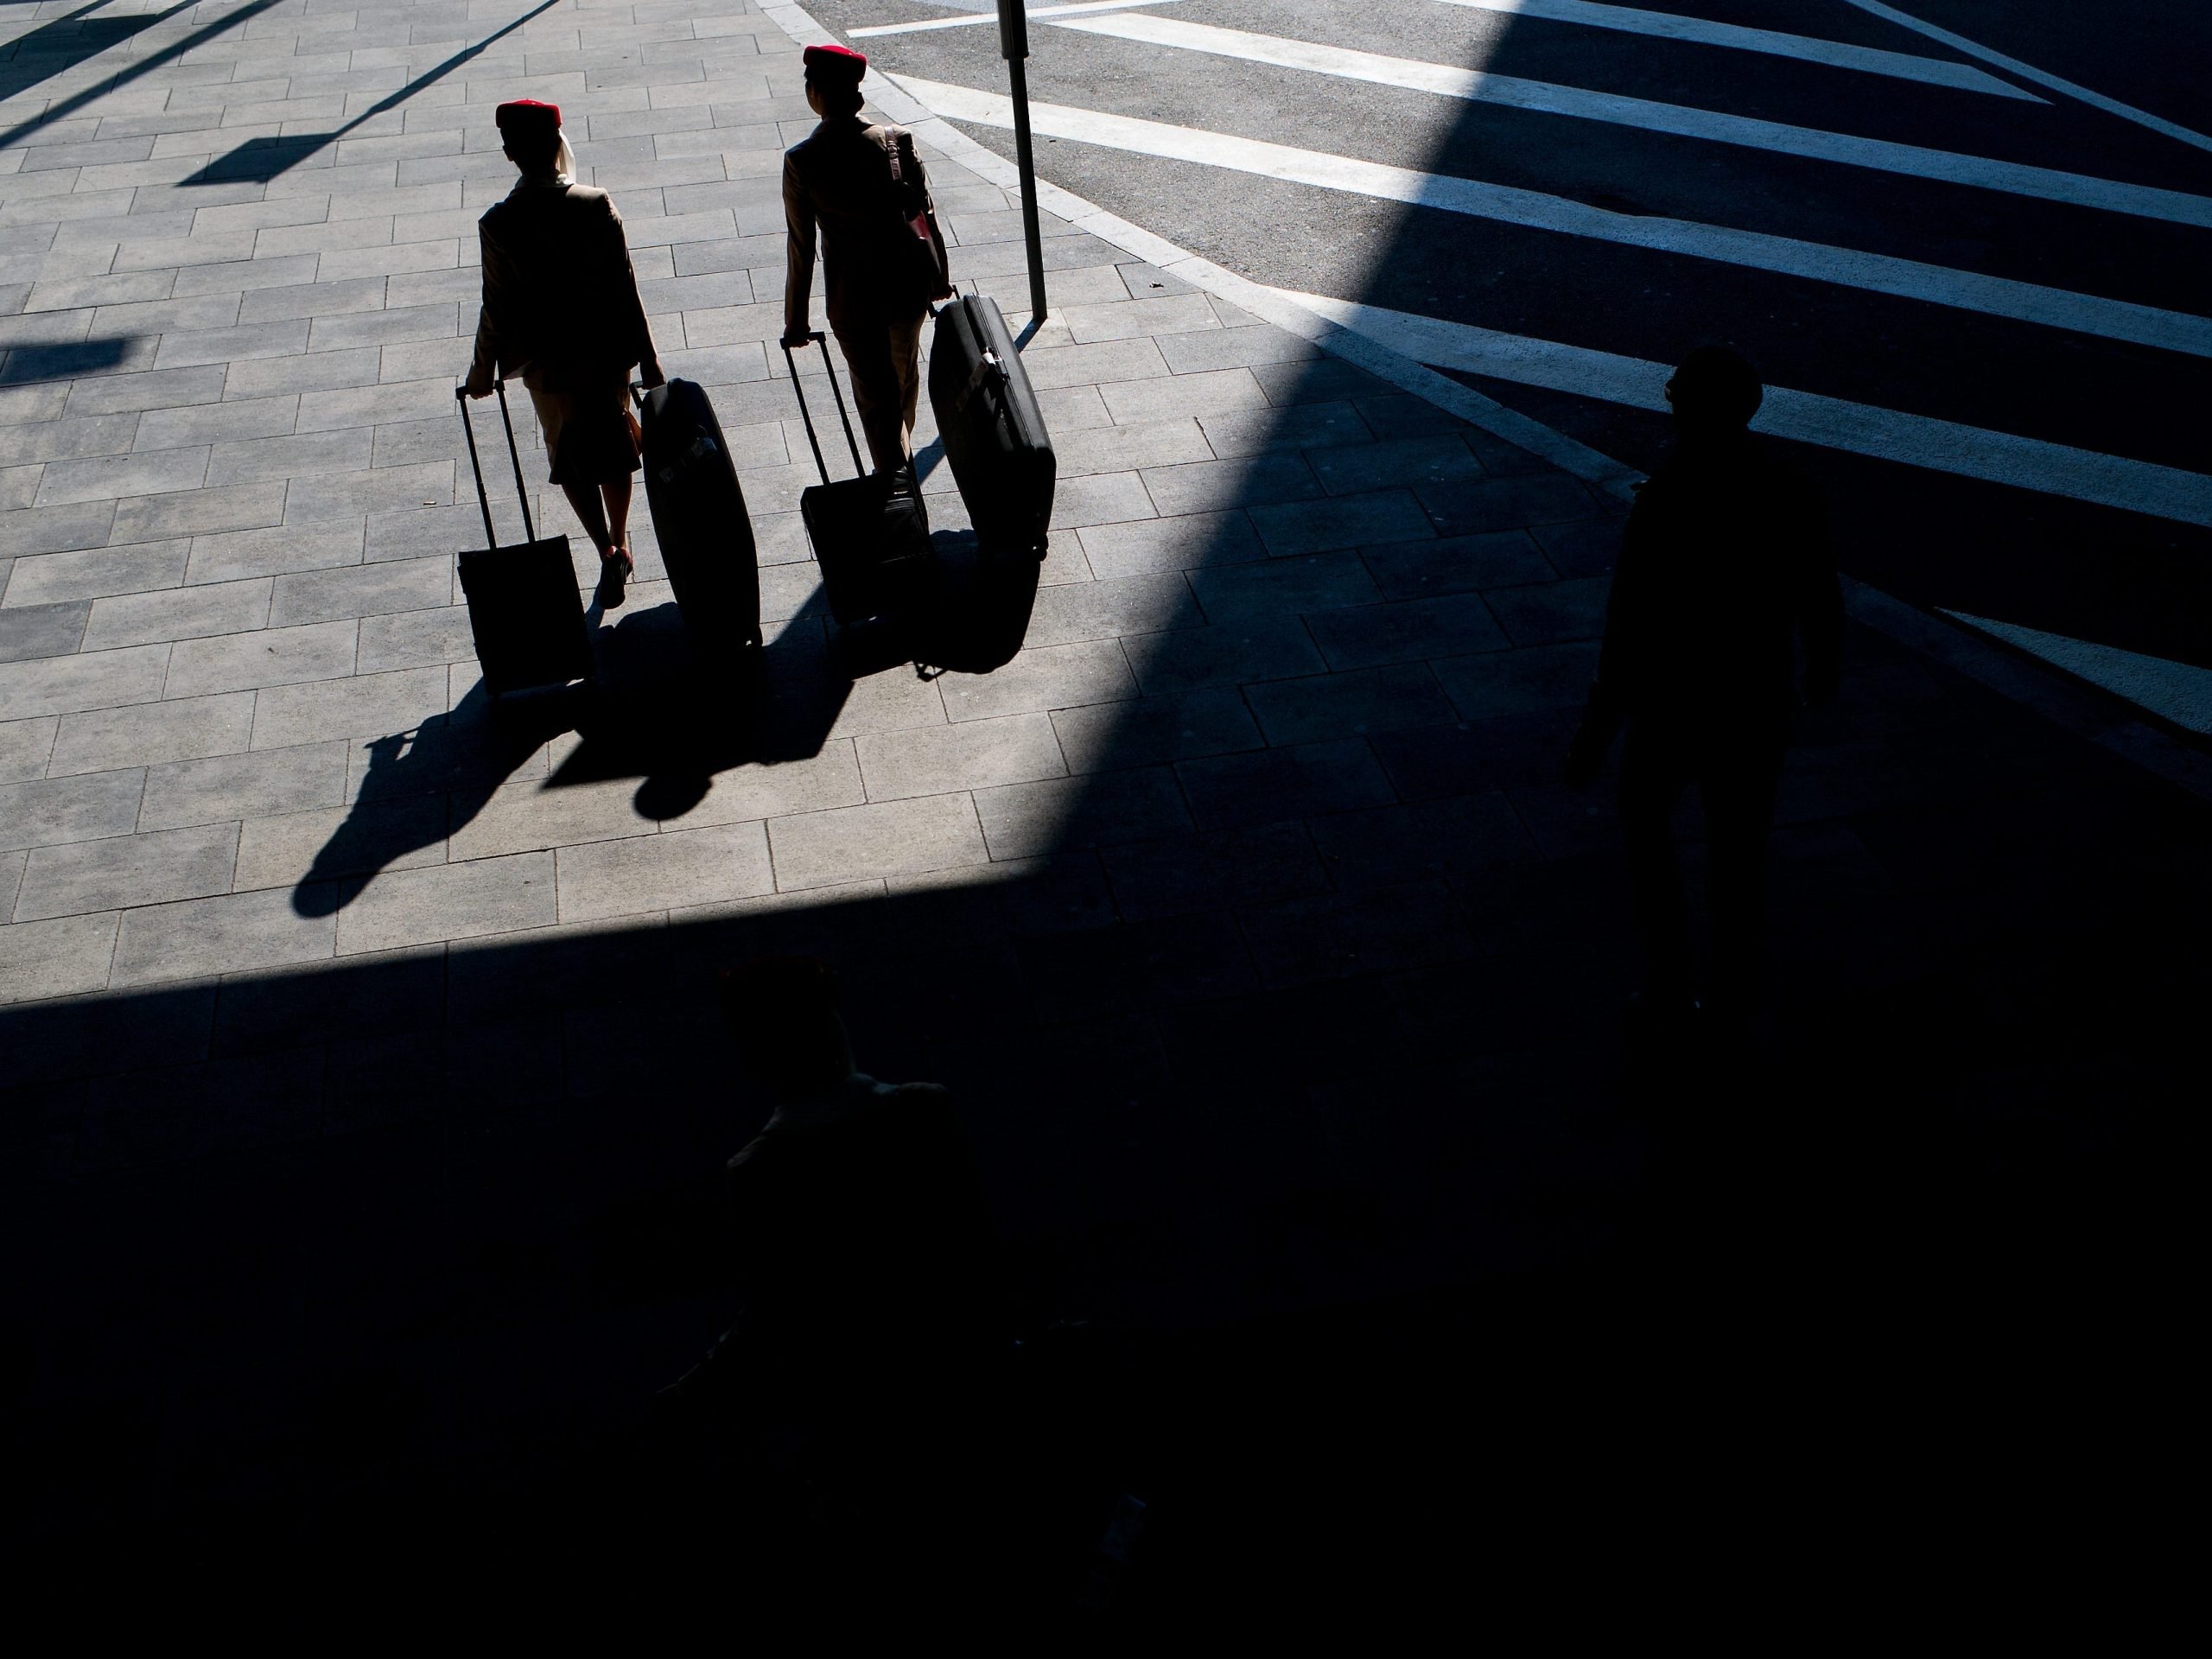 Emirates flight attendants leave the Barcelona - El Prat Airport on February 24, 2013 in Barcelona, Spain.